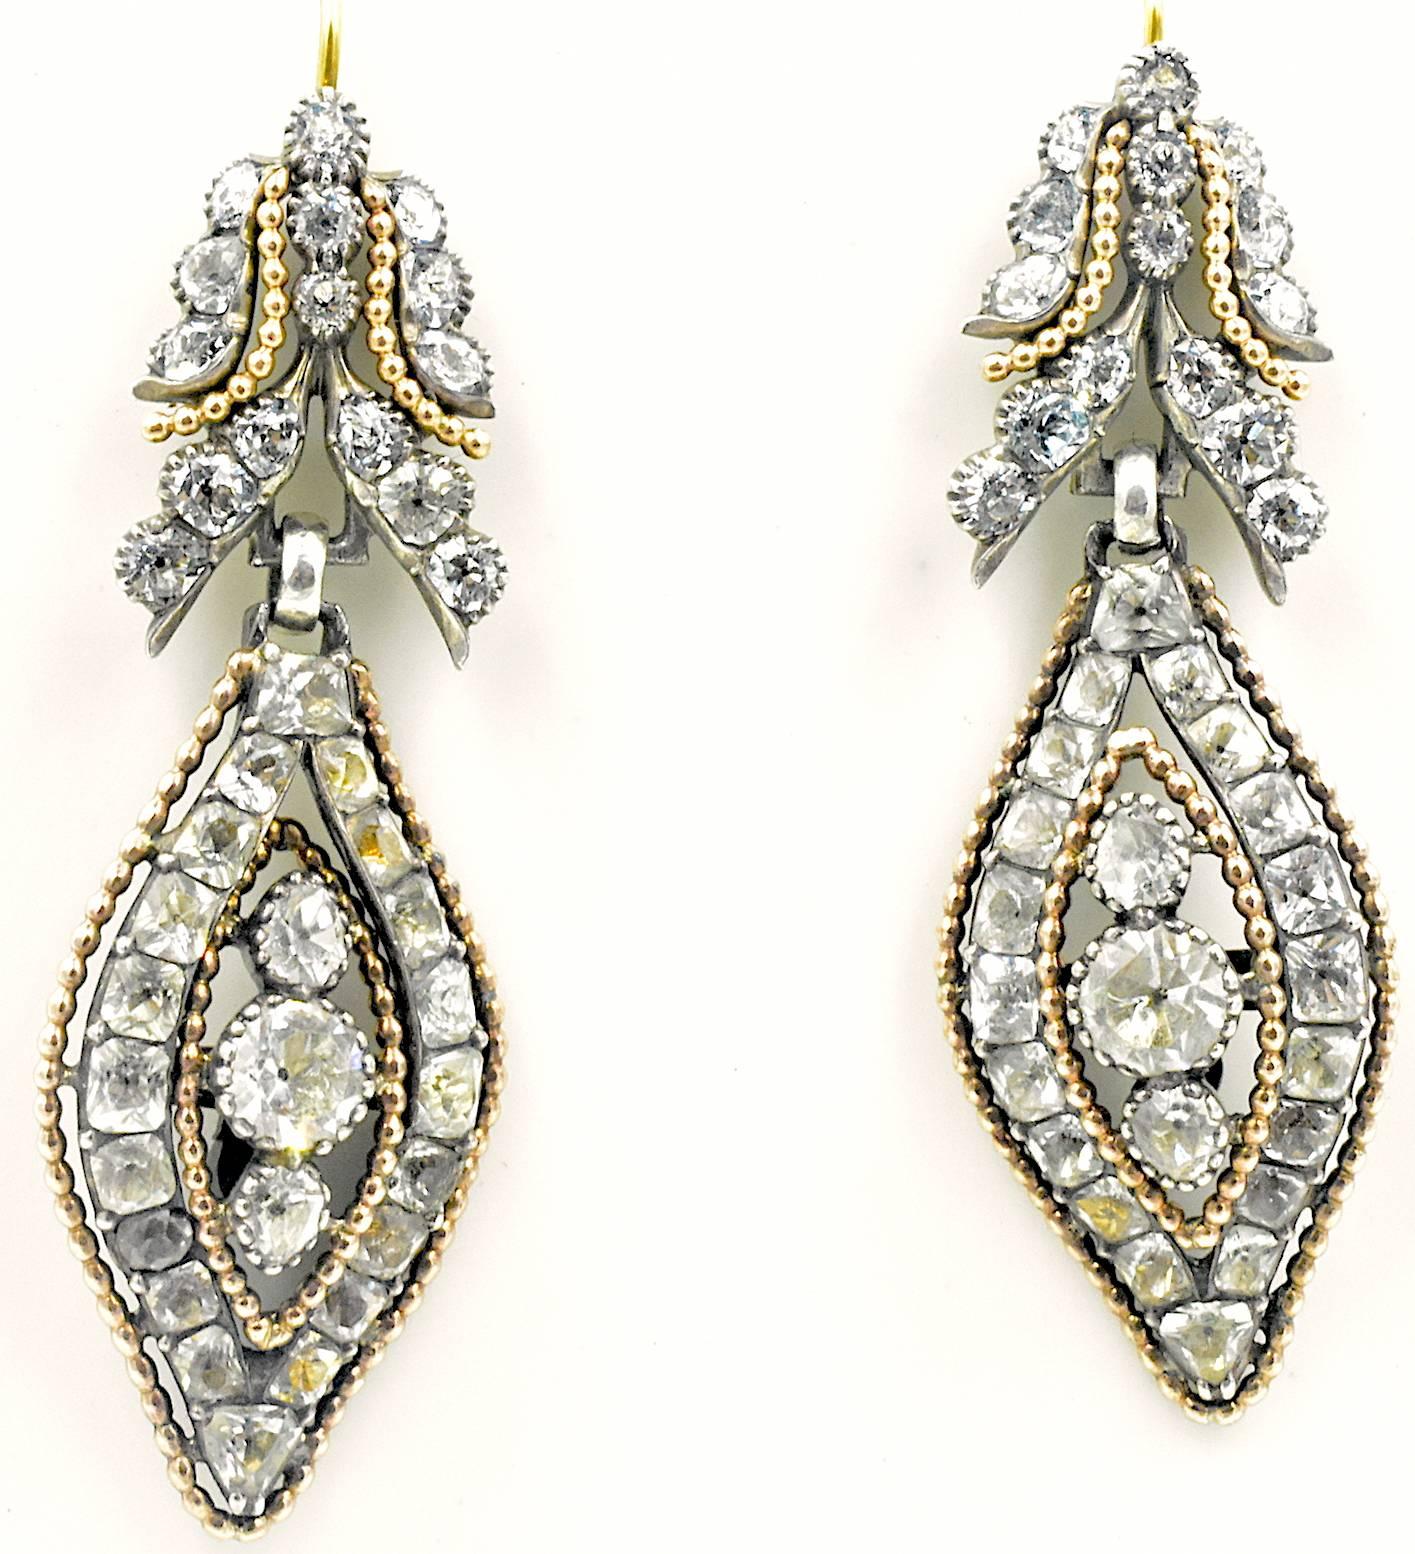 Antique Rock Crystal Floral Earrings 1